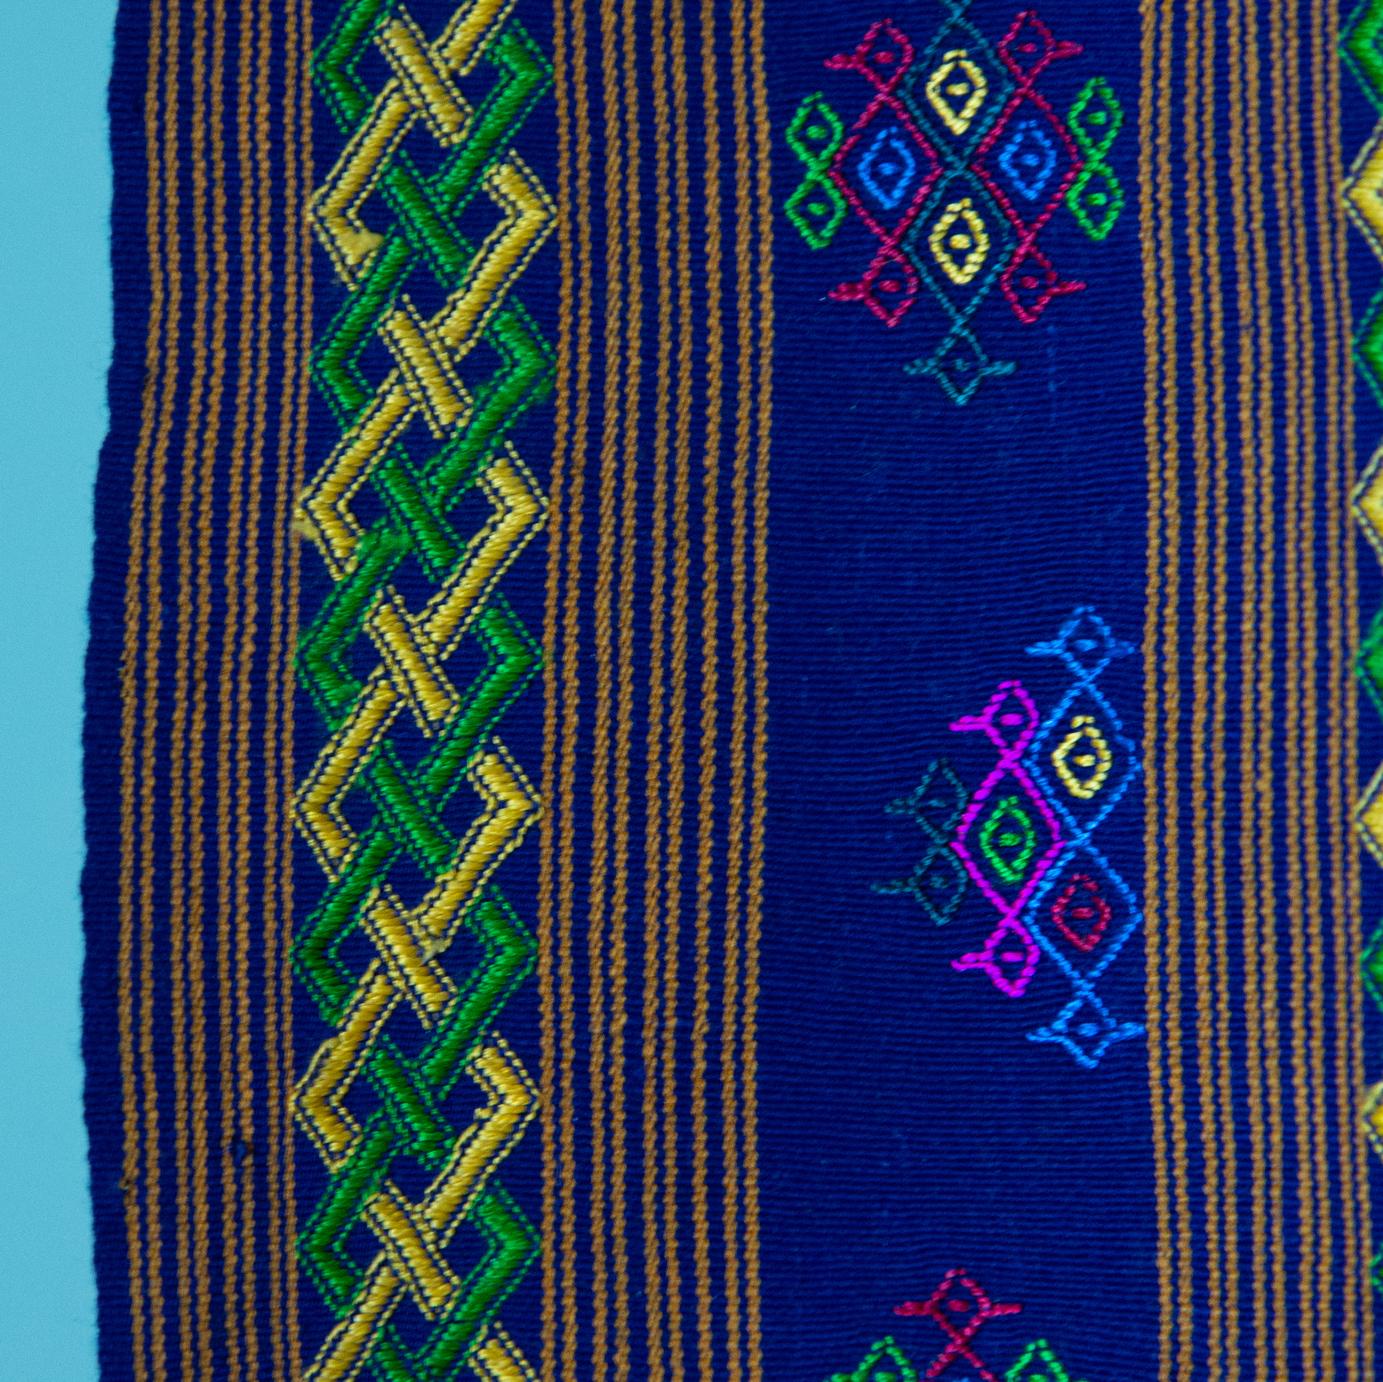 Contemporary Bhutanese Silk Woven Kira Textile, Yellow, from the Royal Weavers of Bhutan